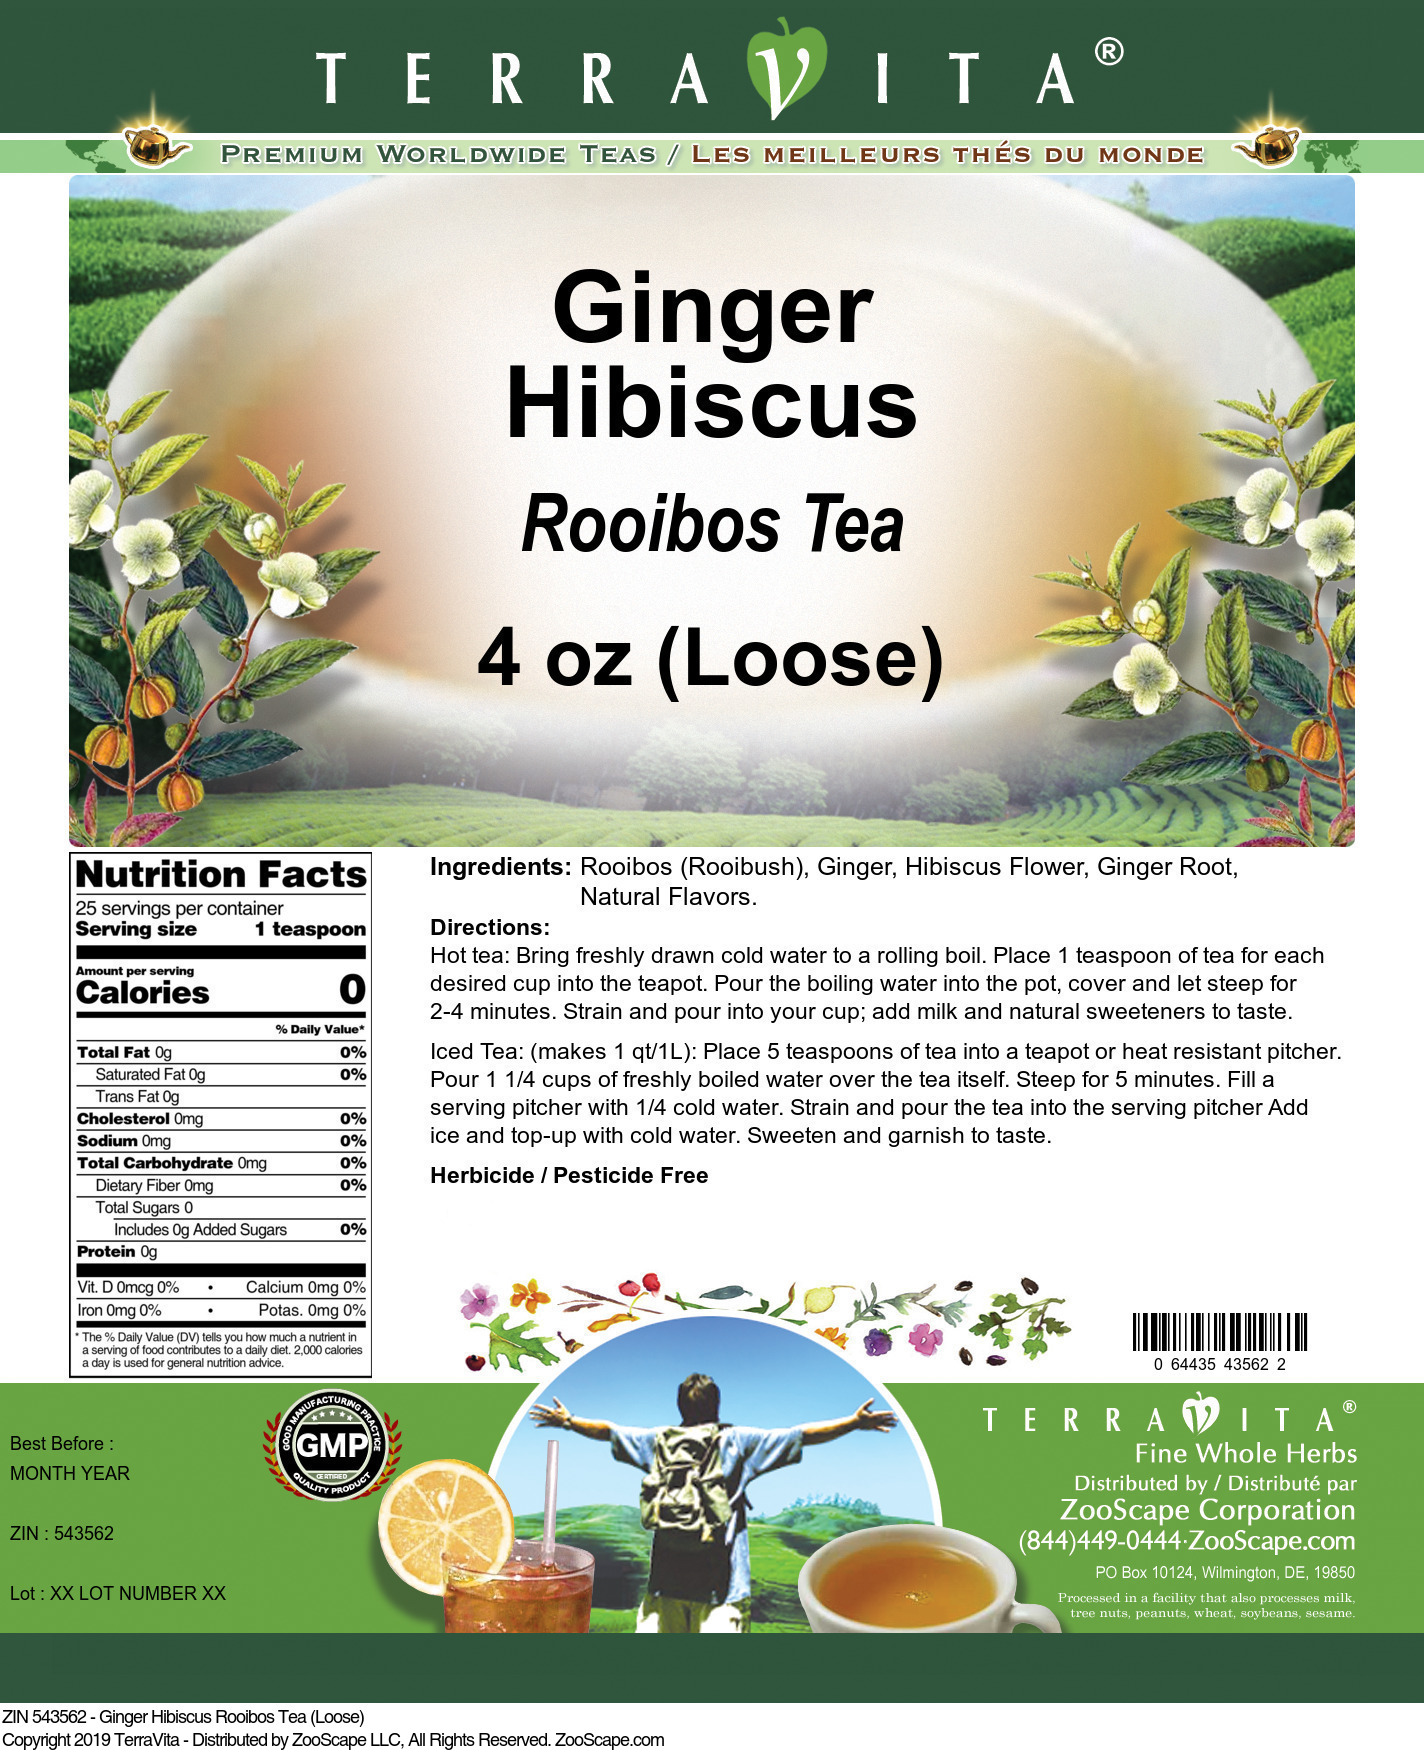 Ginger Hibiscus Rooibos Tea (Loose) - Label